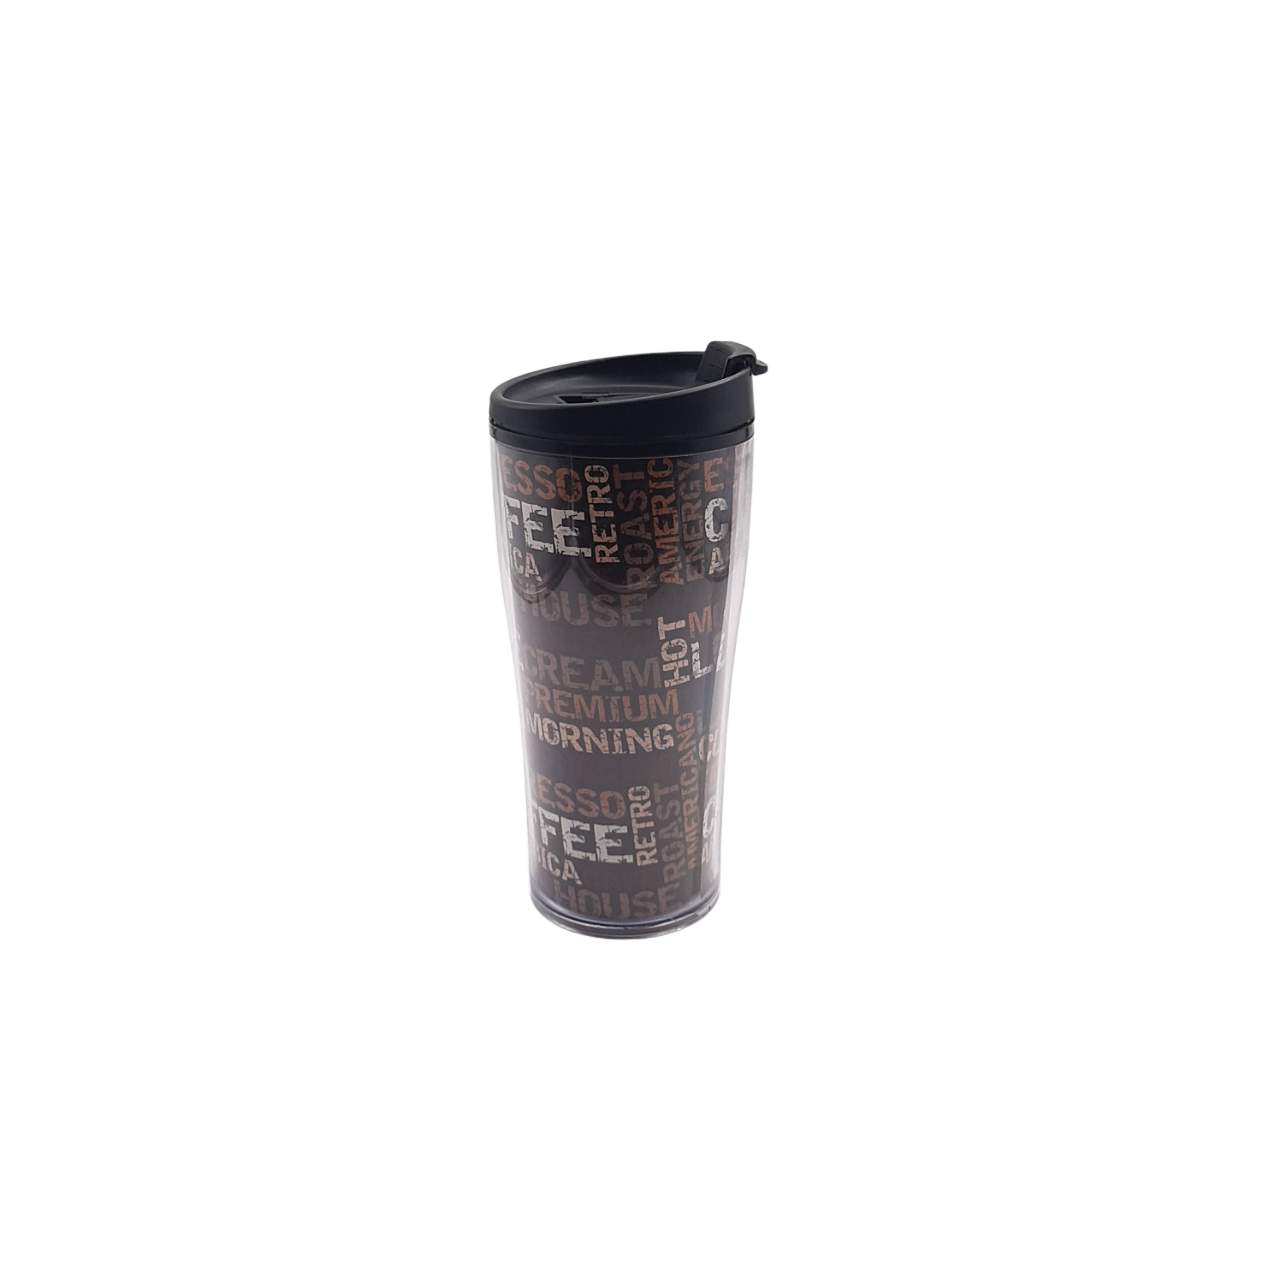 Travel Coffee Mug - Coffee Design